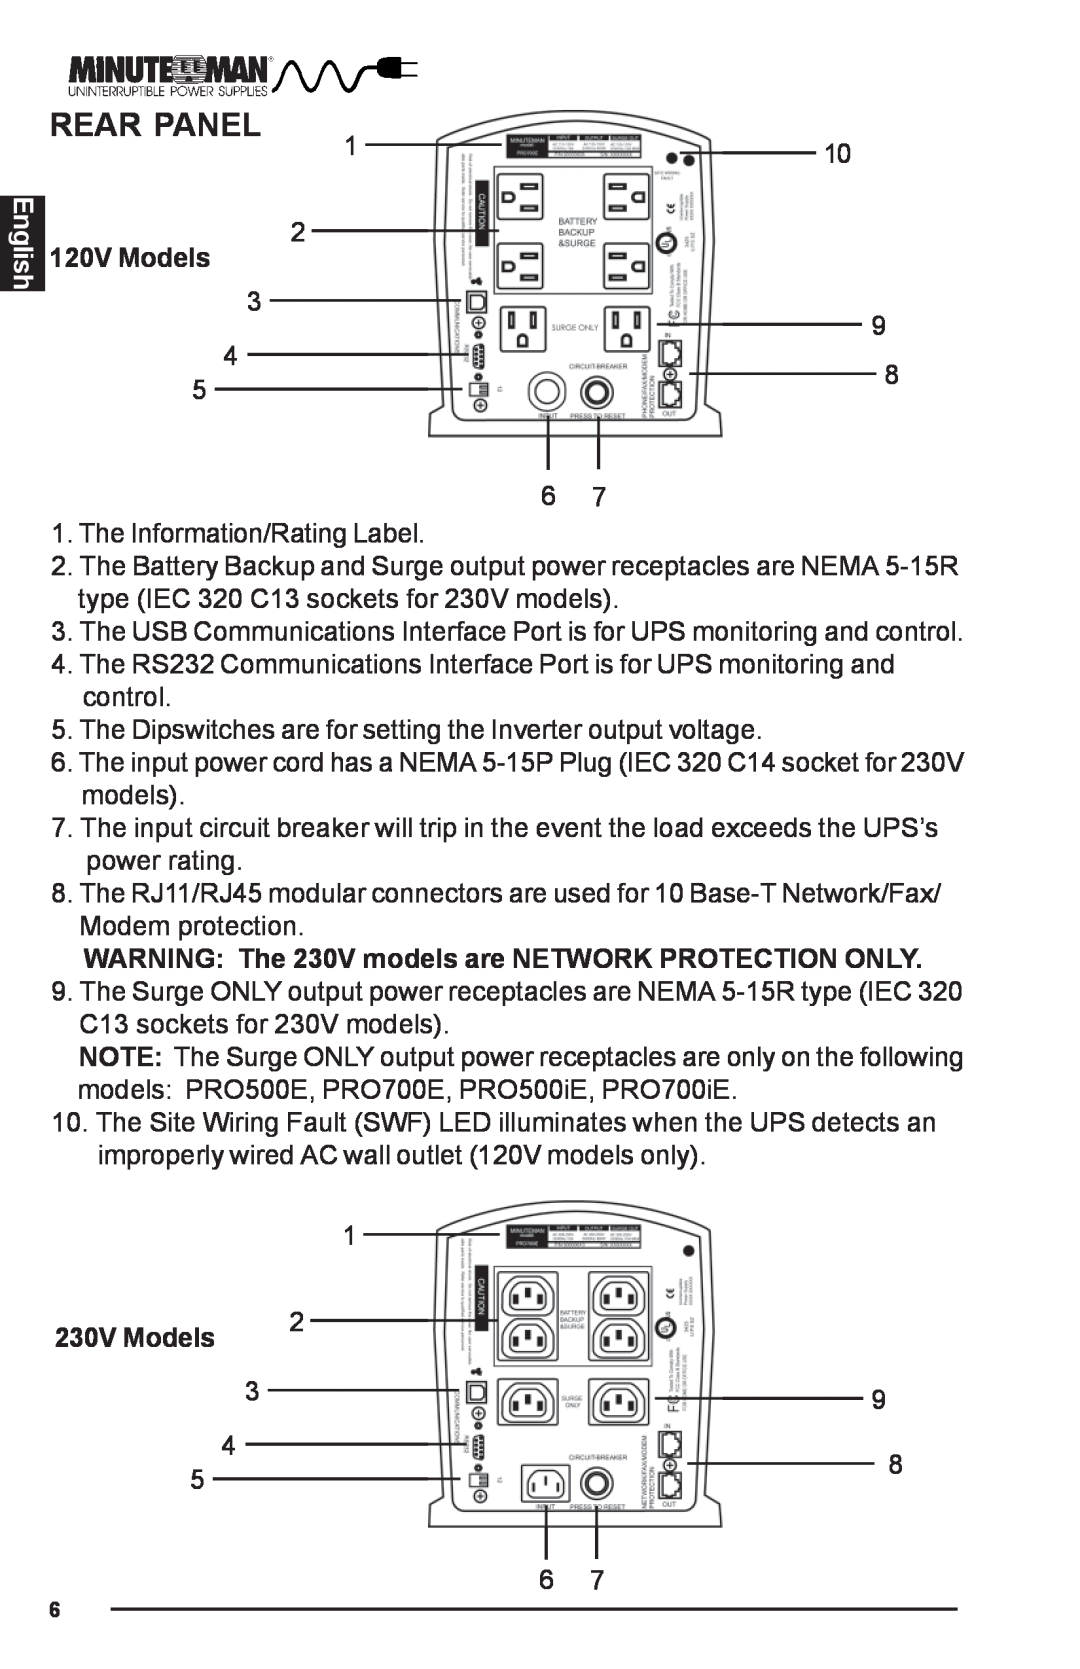 Minuteman UPS PRO-E Rear Panel, English, 120V Models, WARNING The 230V models are NETWORK PROTECTION ONLY, 230V Models 